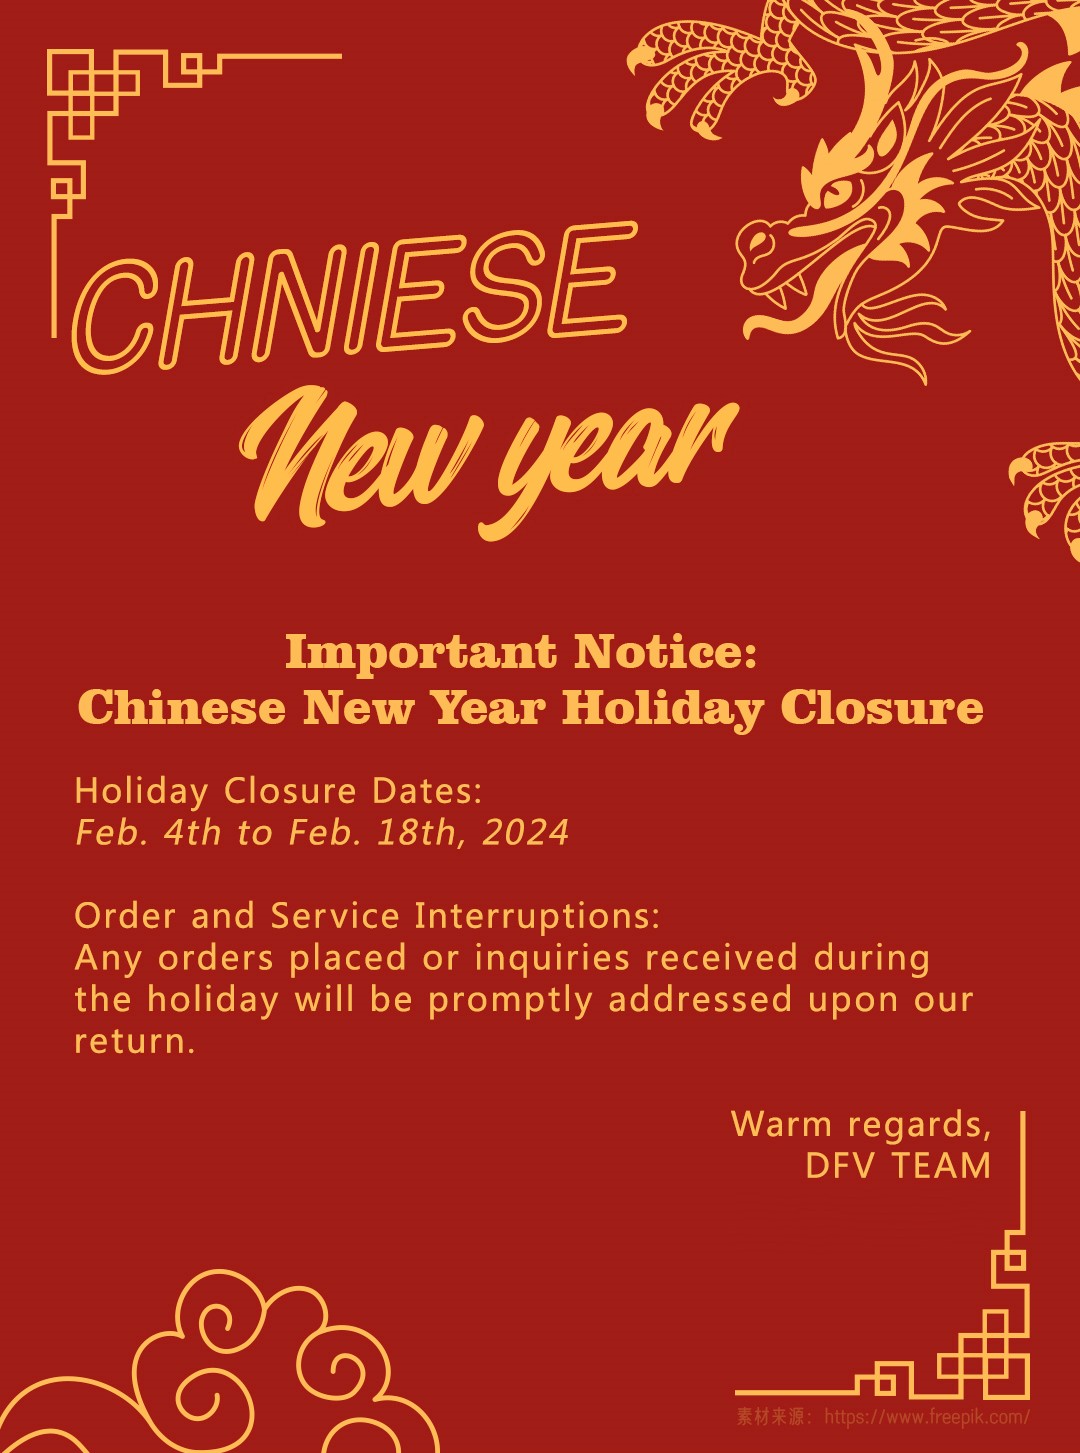 Important Notice: Spring Festival Holiday Closure Notice